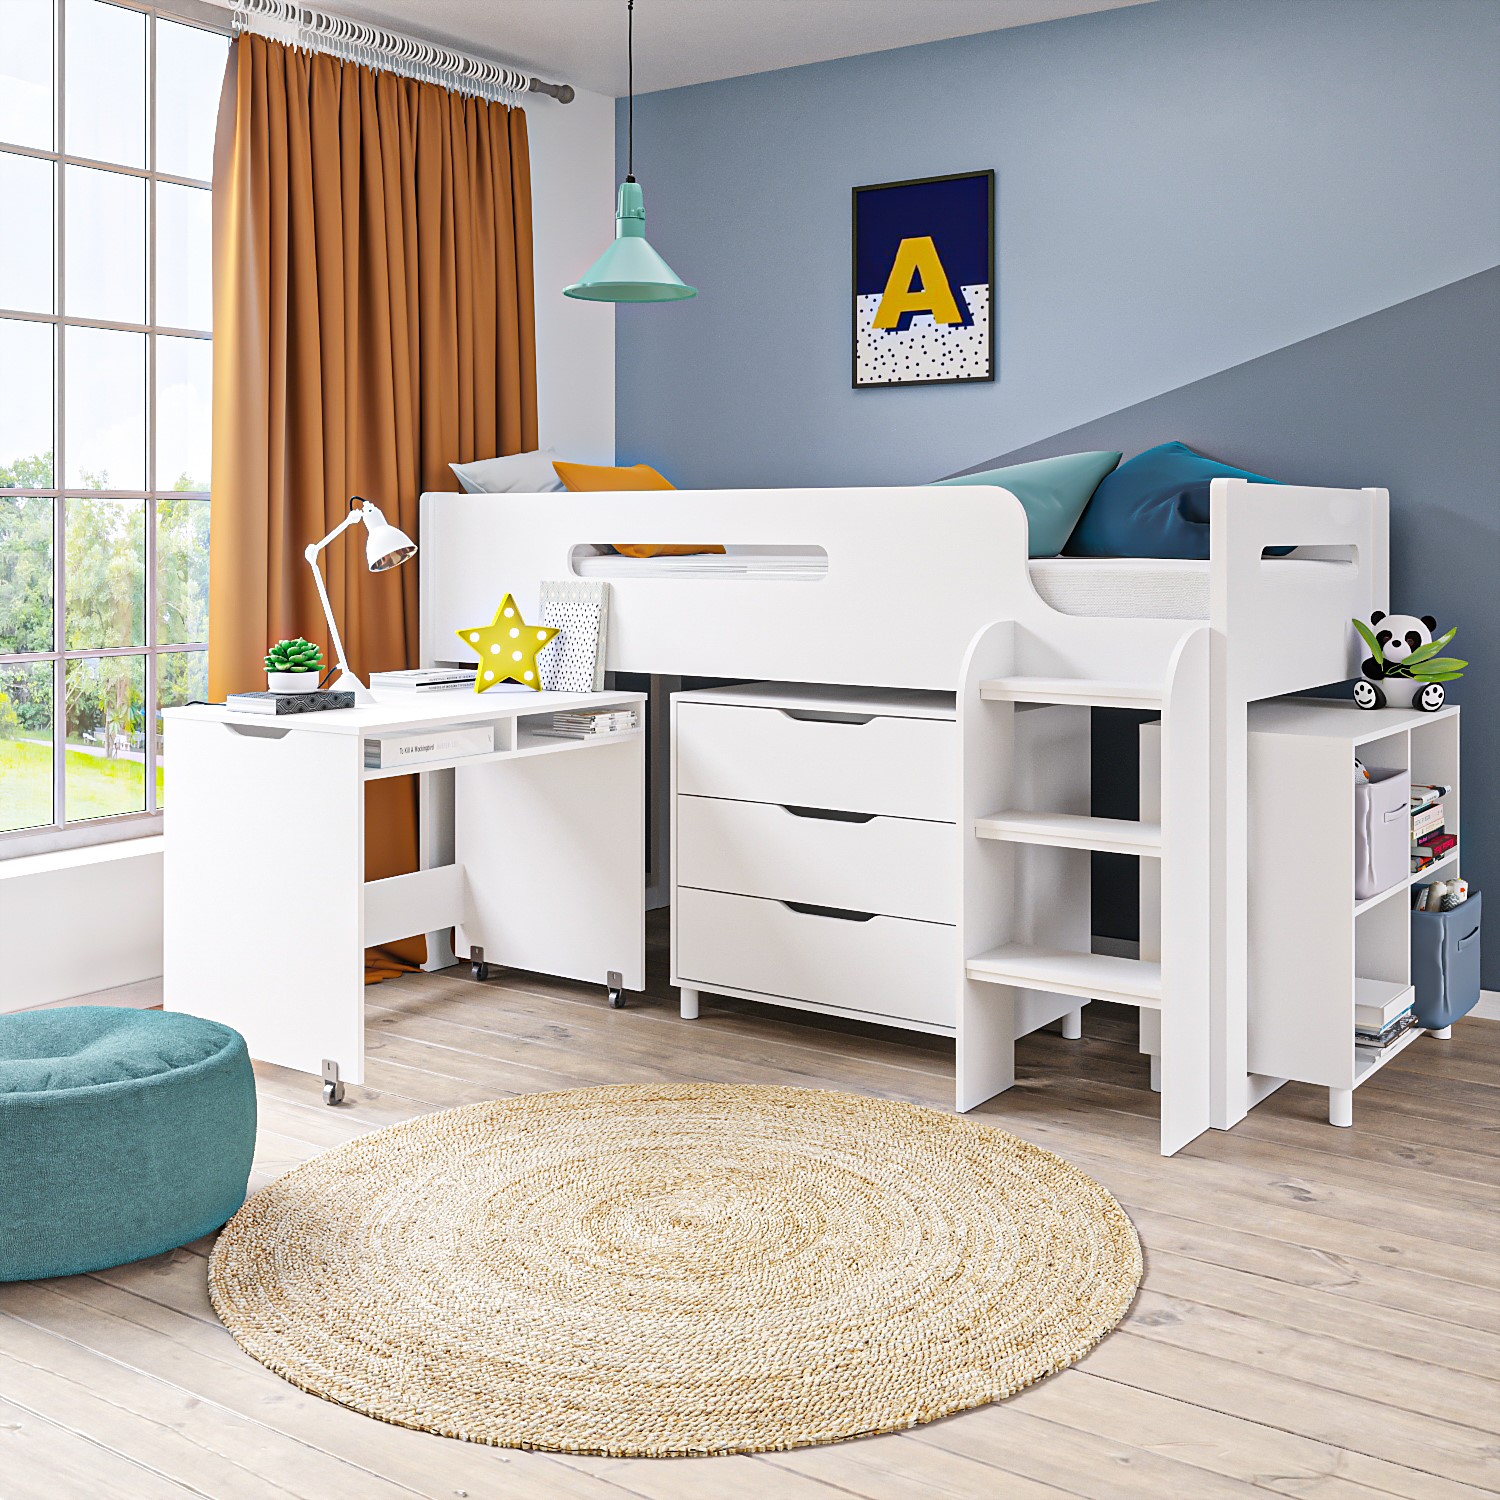 Dynamo Mid Sleeper Cabin Bed with Desk - White DYN001 5060388566319.0